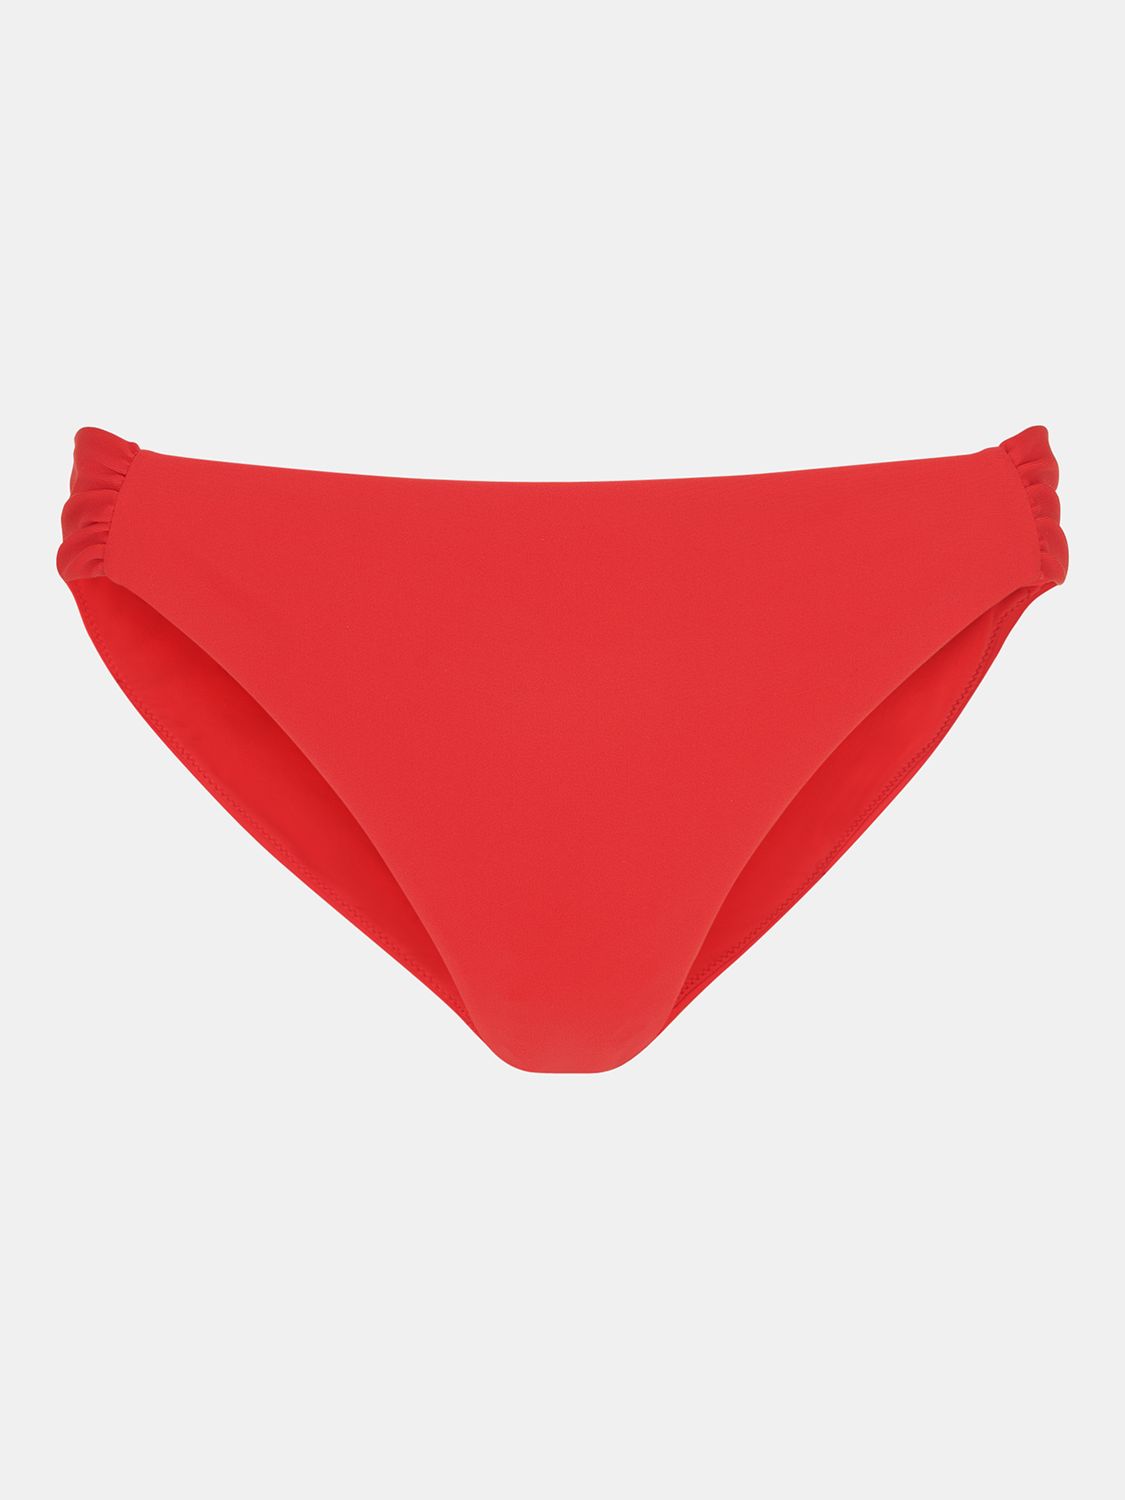 Whistles Lillie Bikini Bottoms, Red, 6